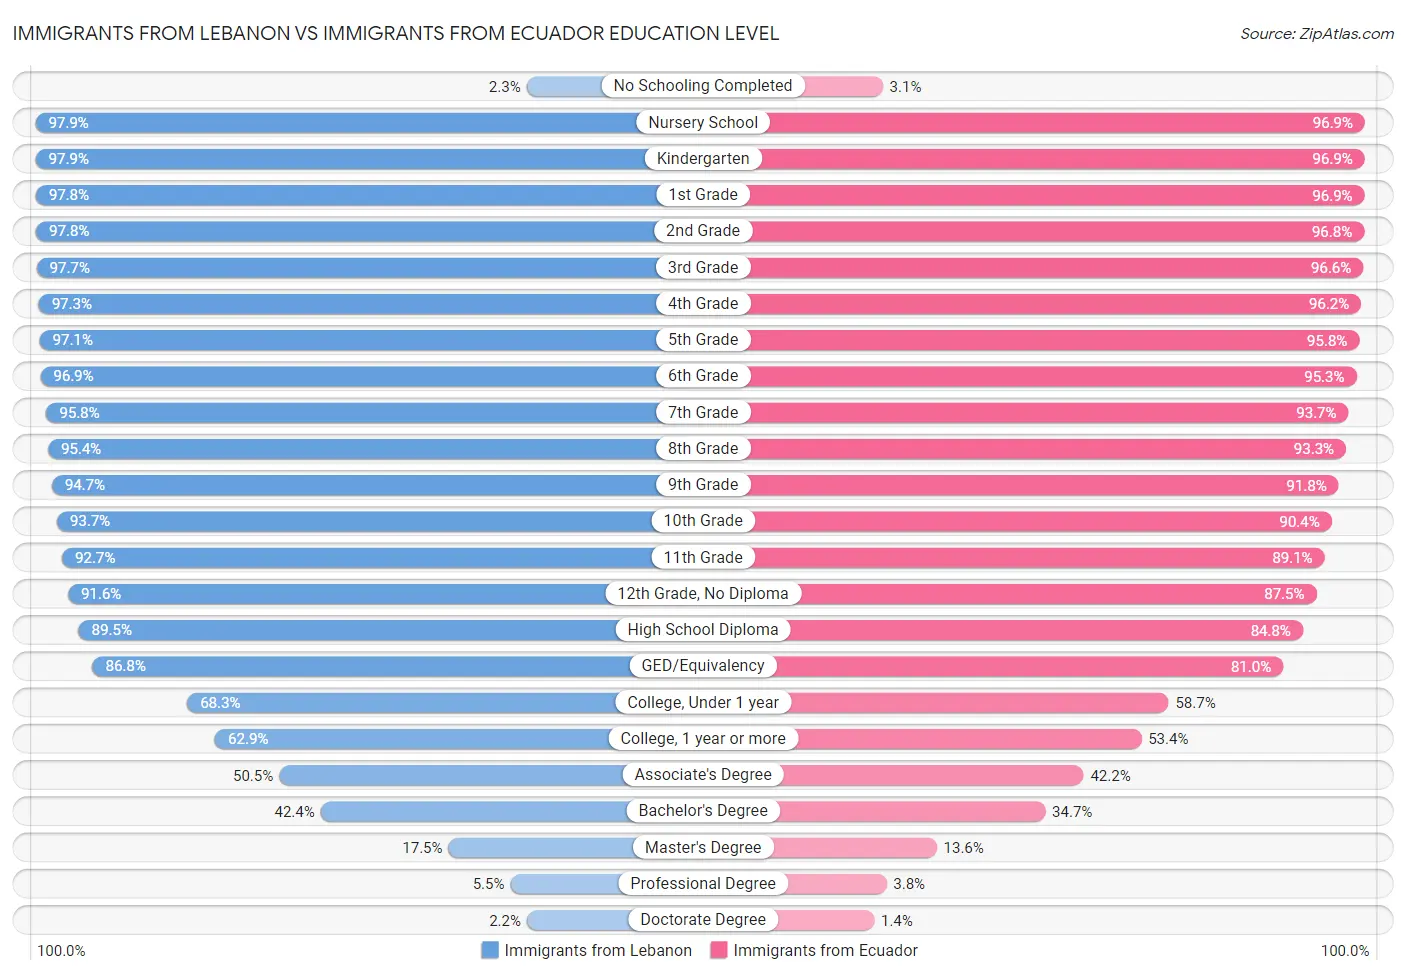 Immigrants from Lebanon vs Immigrants from Ecuador Education Level